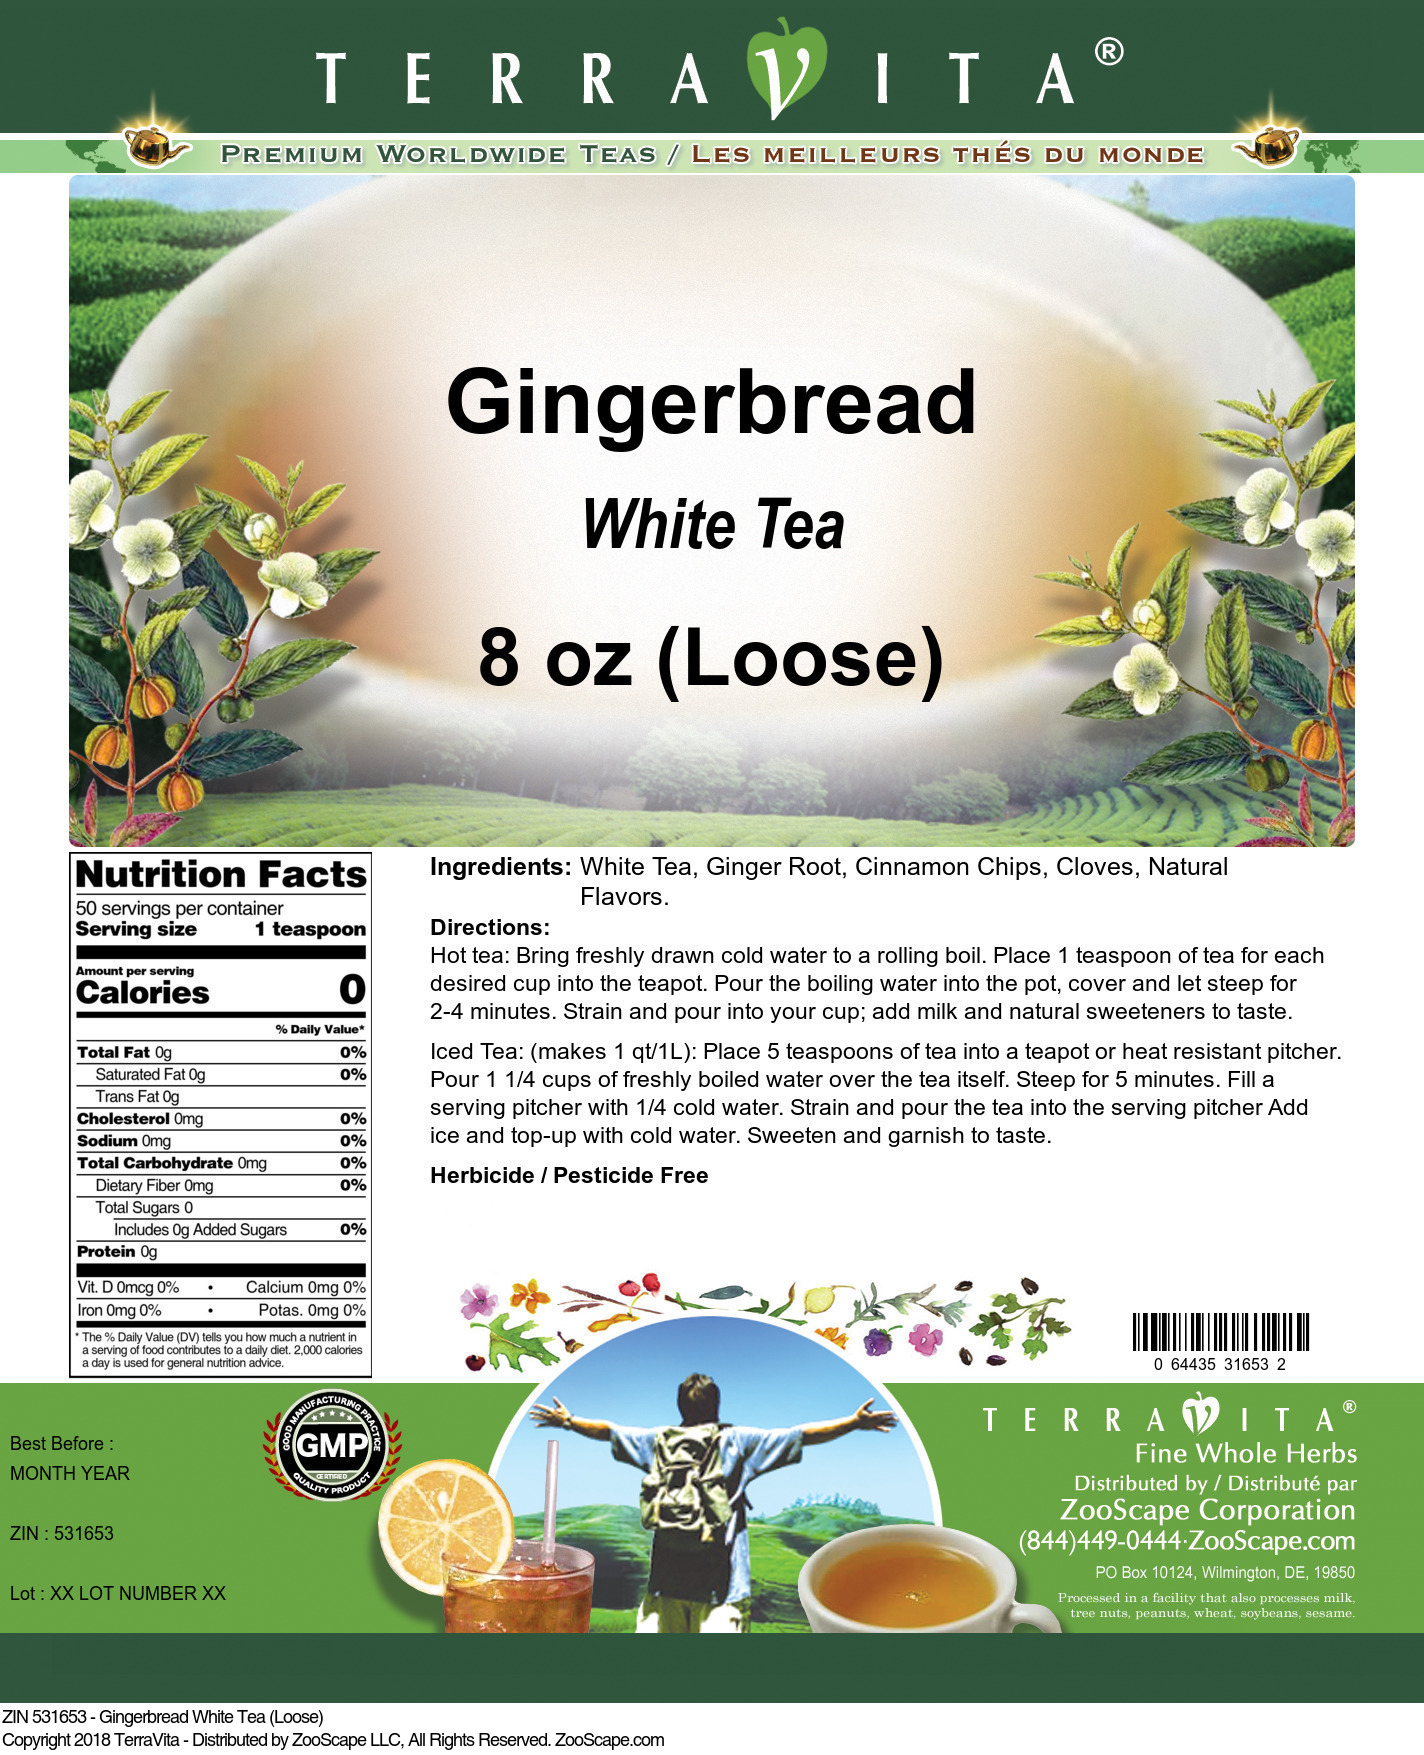 Gingerbread White Tea (Loose) - Label